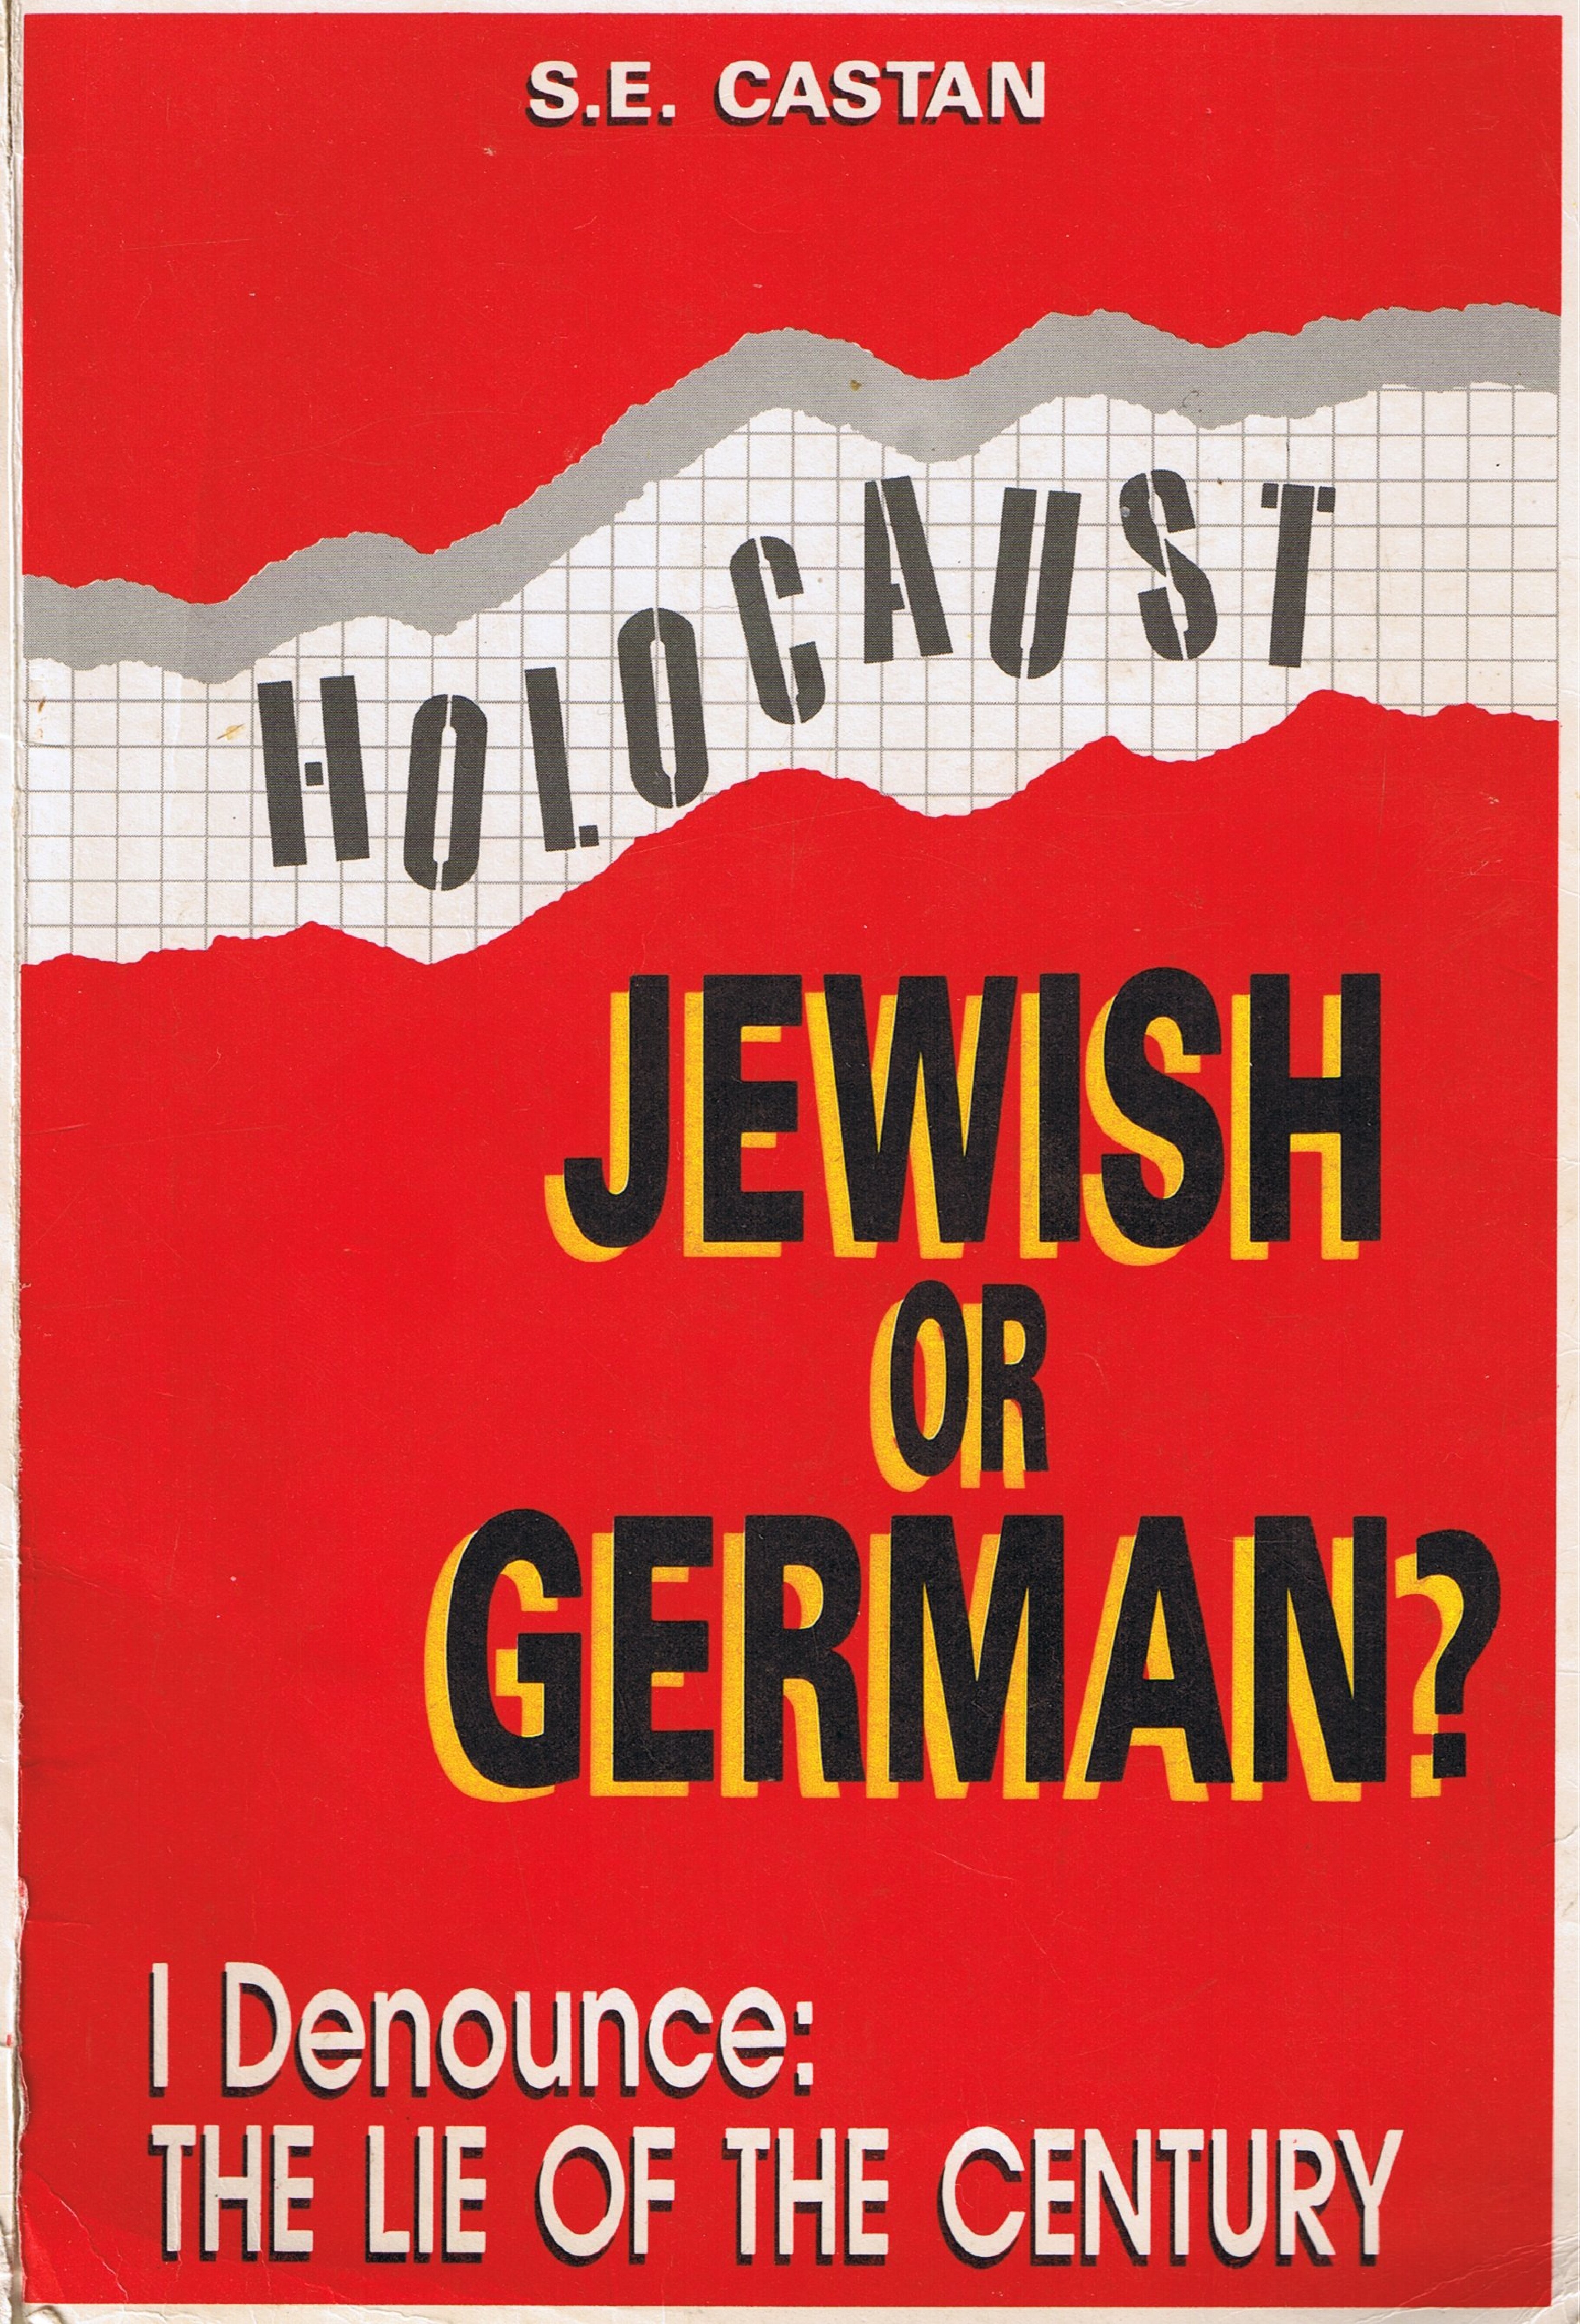 Castan, S. E. - Holocaust; Jewish or German